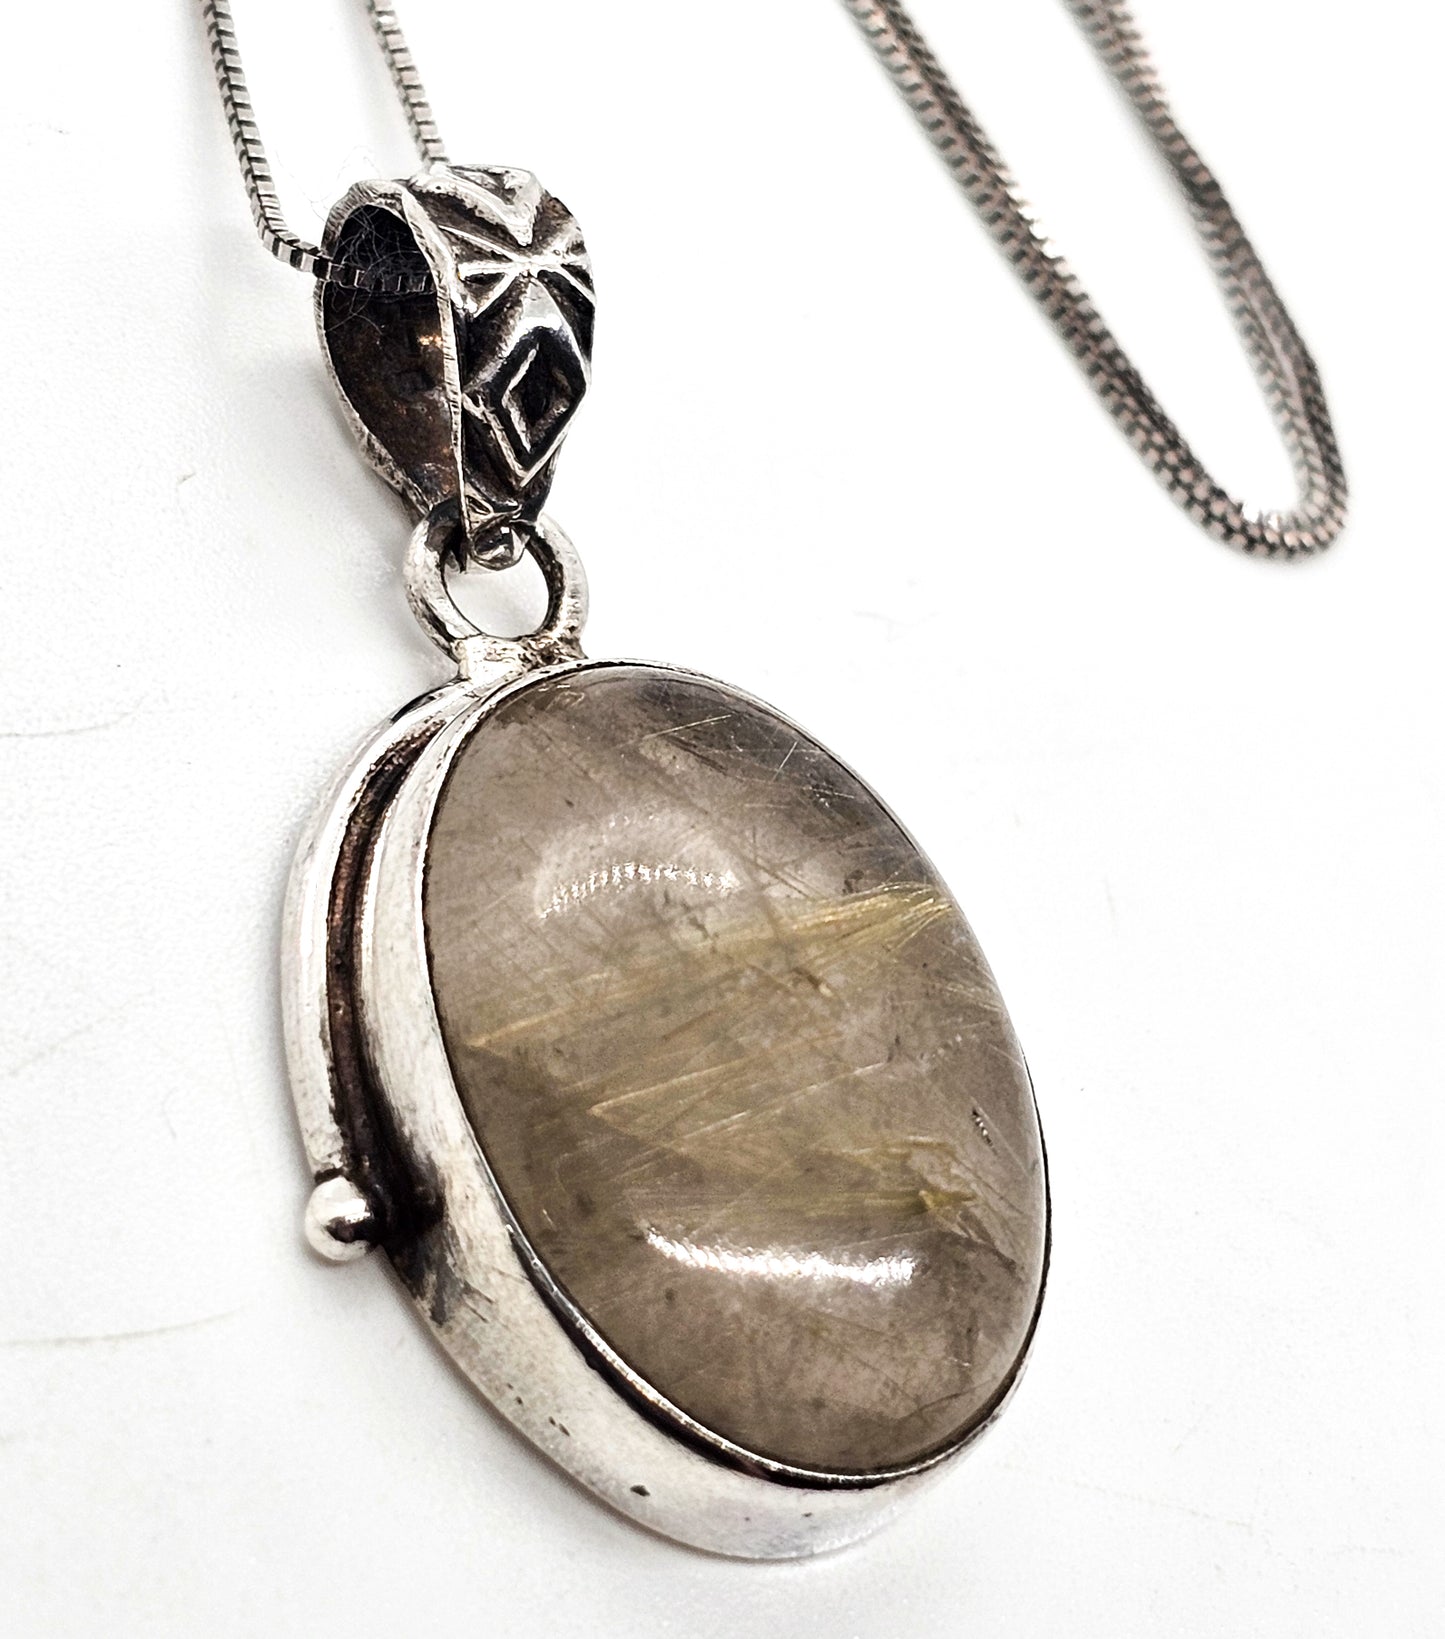 Golden Rutile Rutilated Quartz gemstone sterling silver pendant necklace